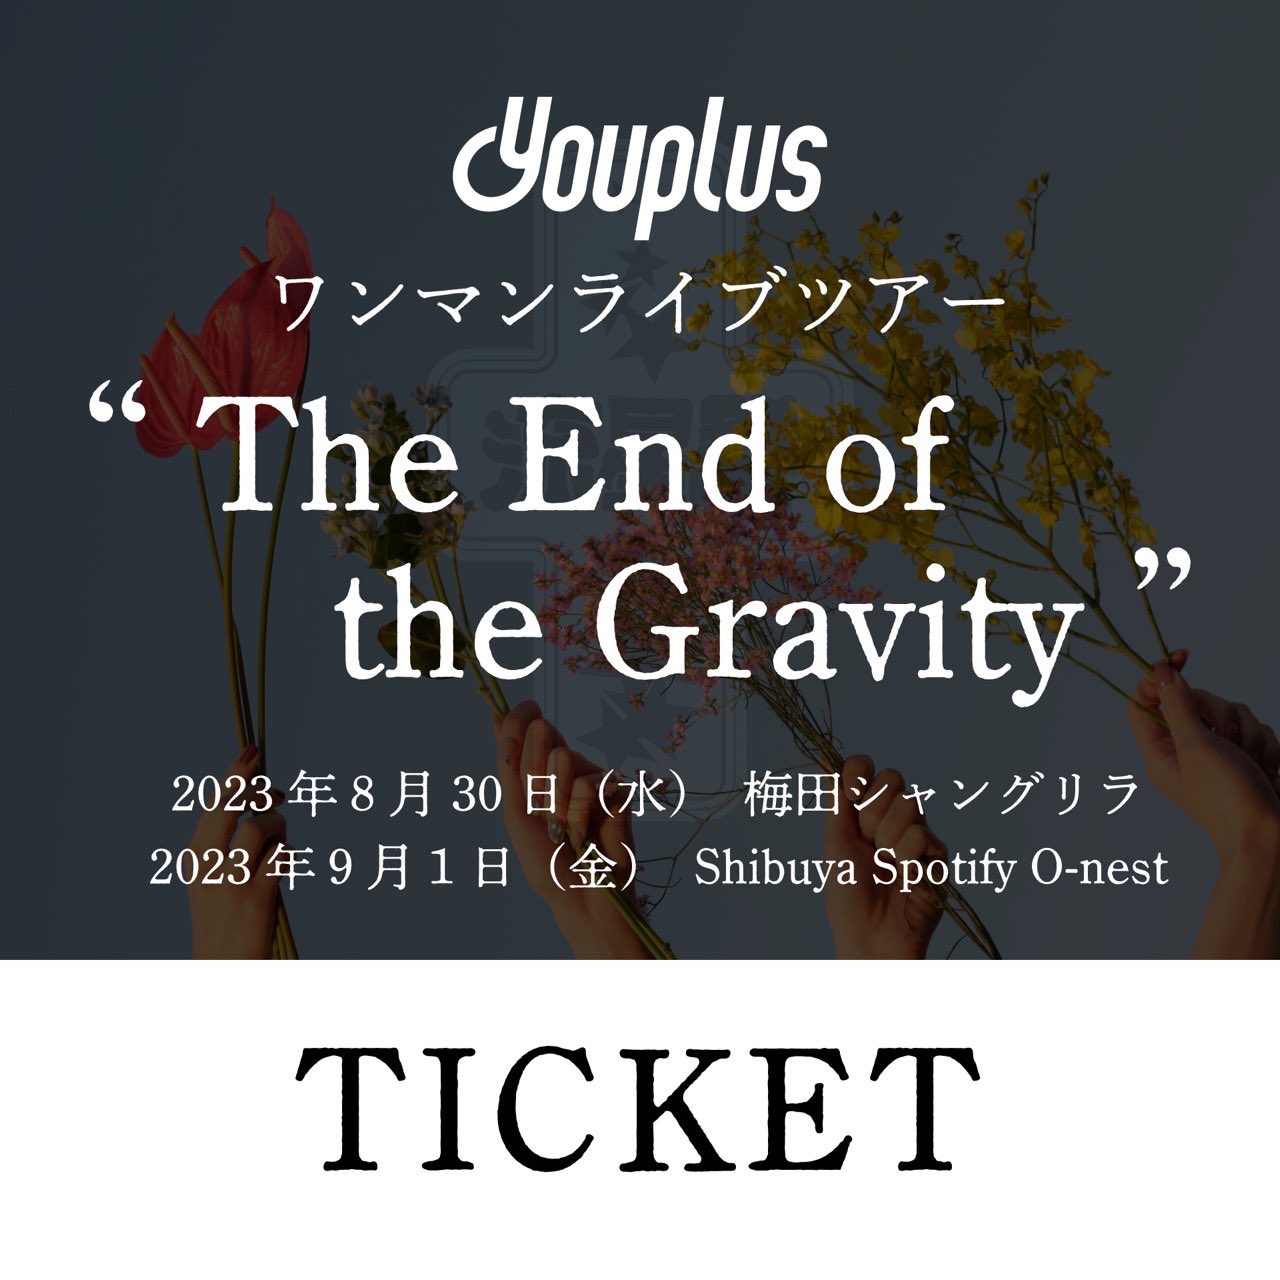 Youplus ワンマンライブツアー “The End of the Gravity”